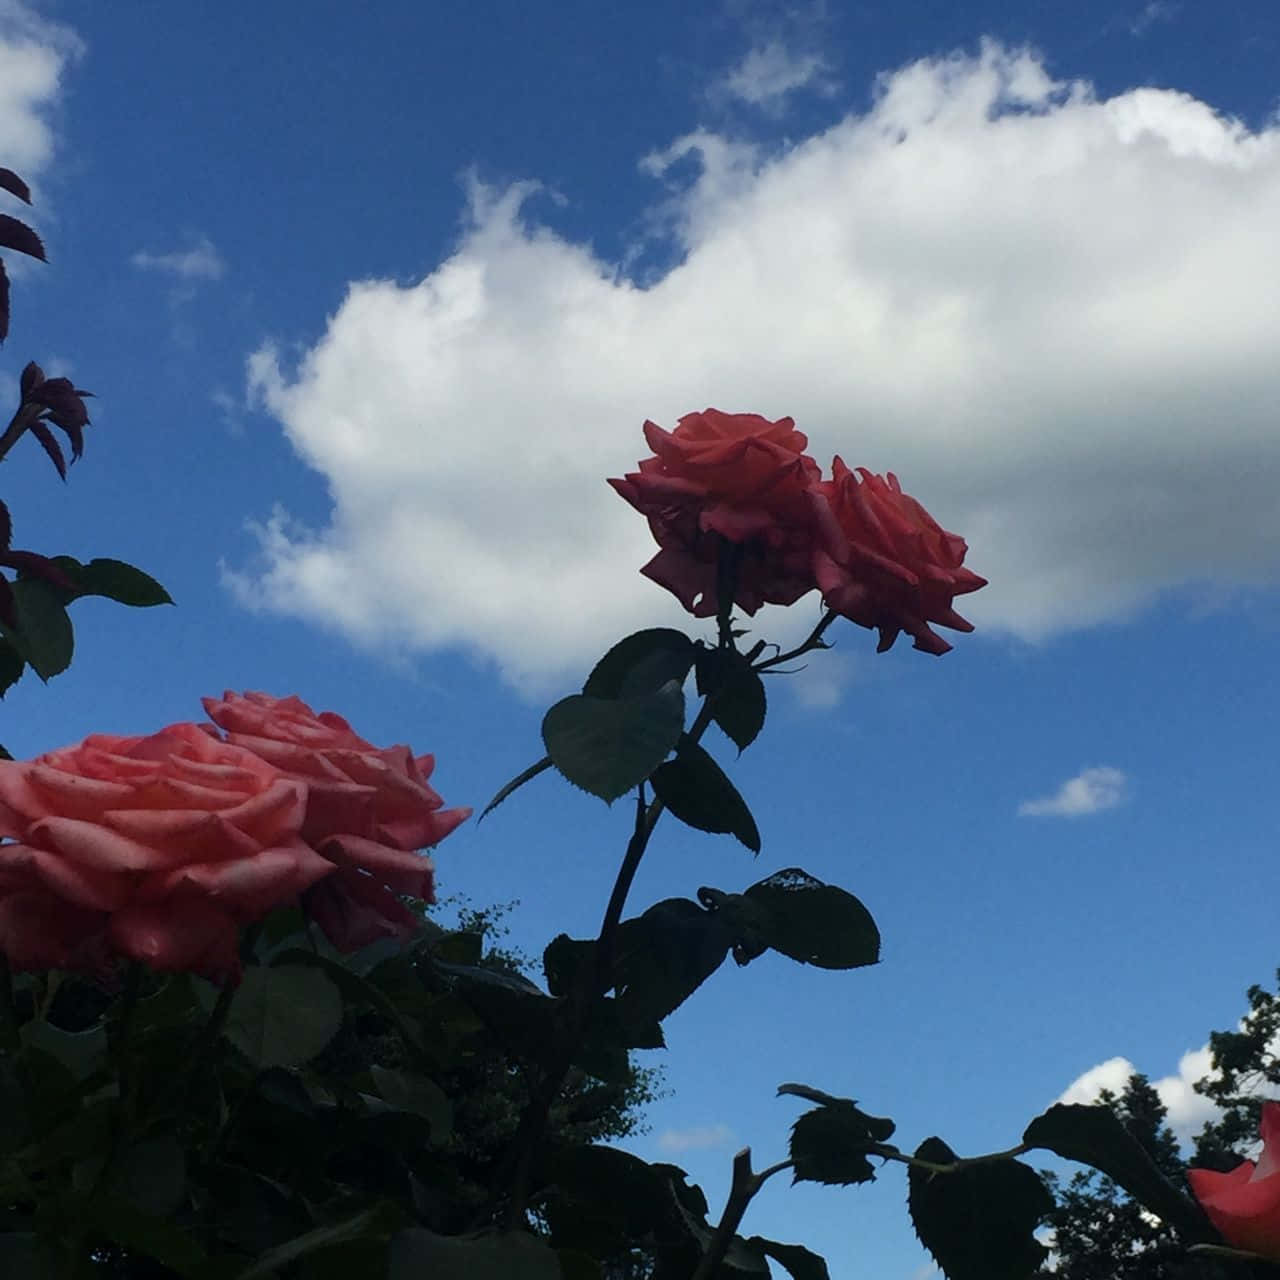 Elegant Aesthetic Rose Background